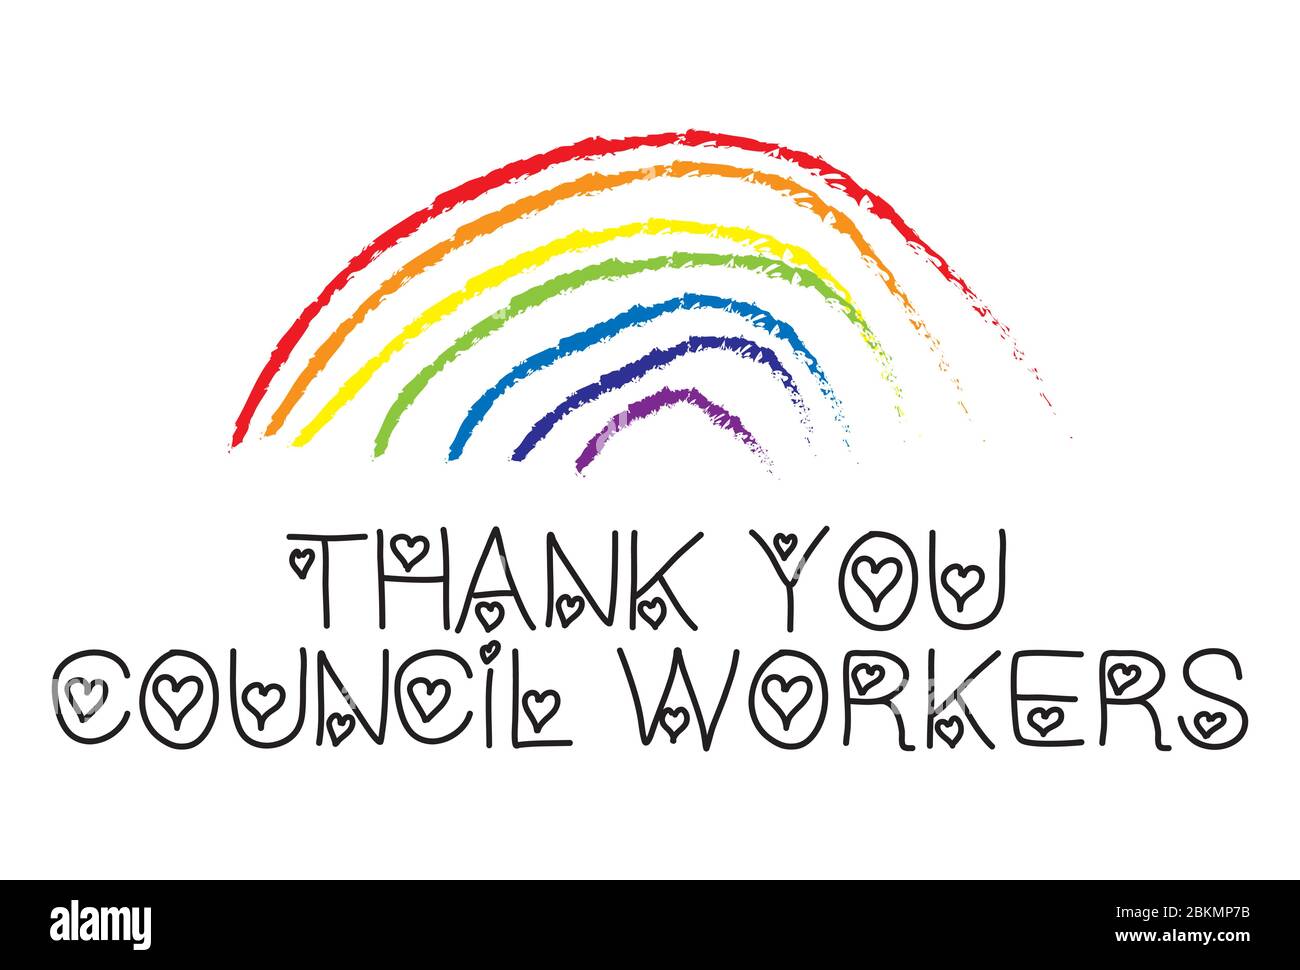 Merci Council Workers Rainbow Vector Illustration de Vecteur